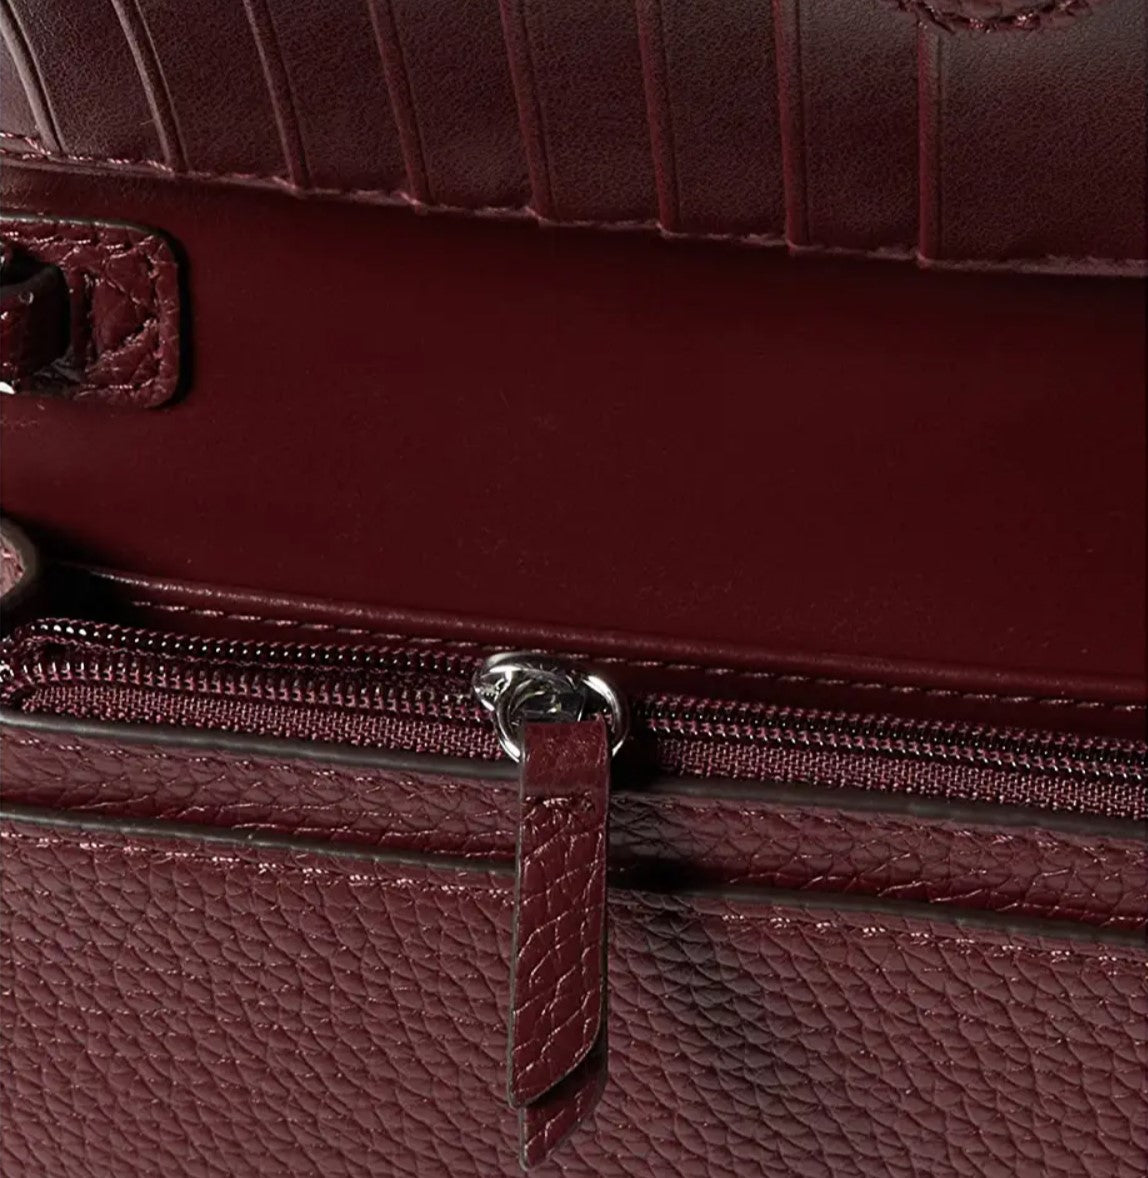 Michael Kors Jet Set Charm Small Phone Crossbody Bag